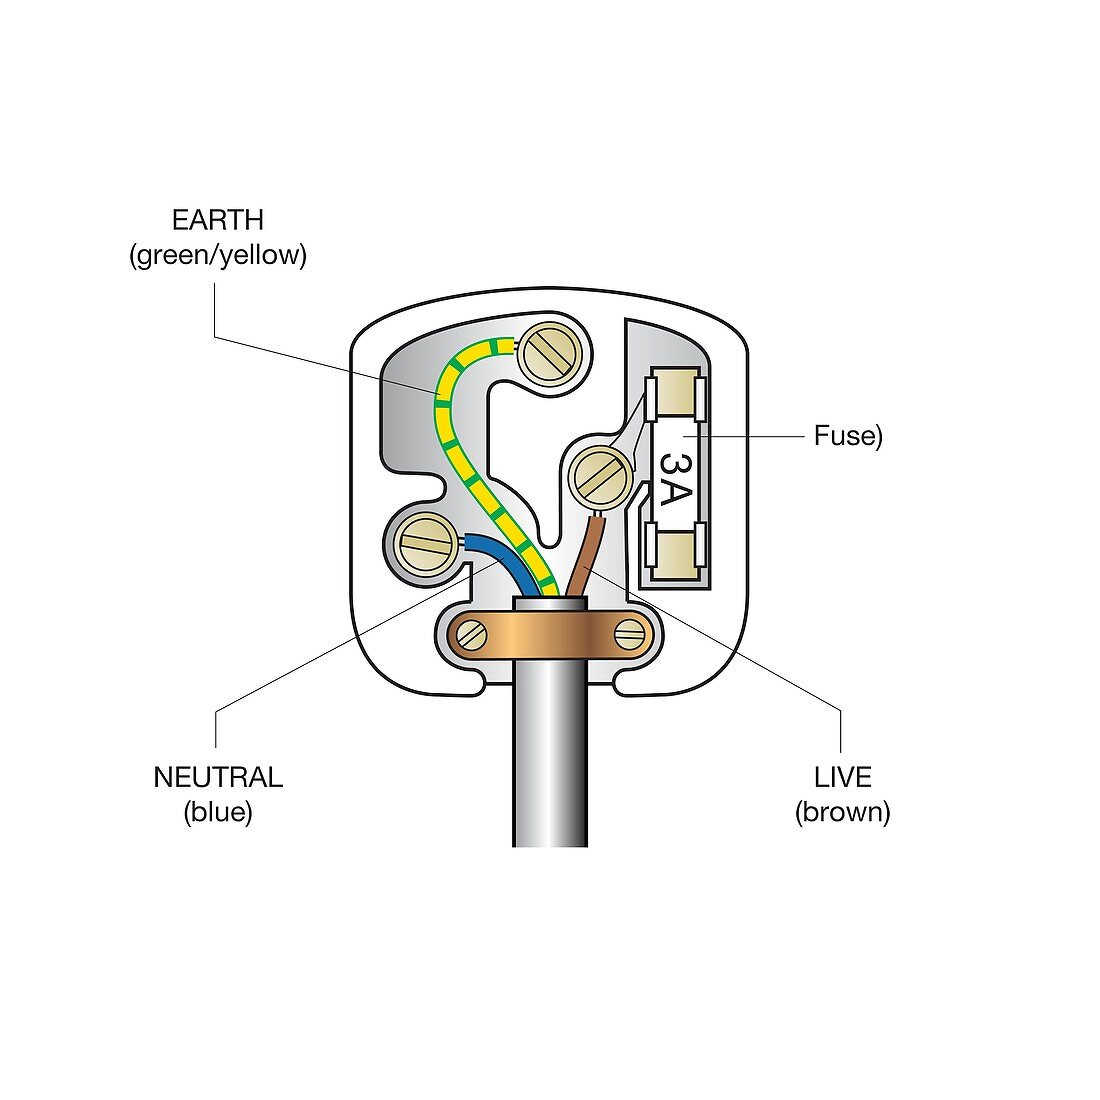 Three-pin plug, illustration